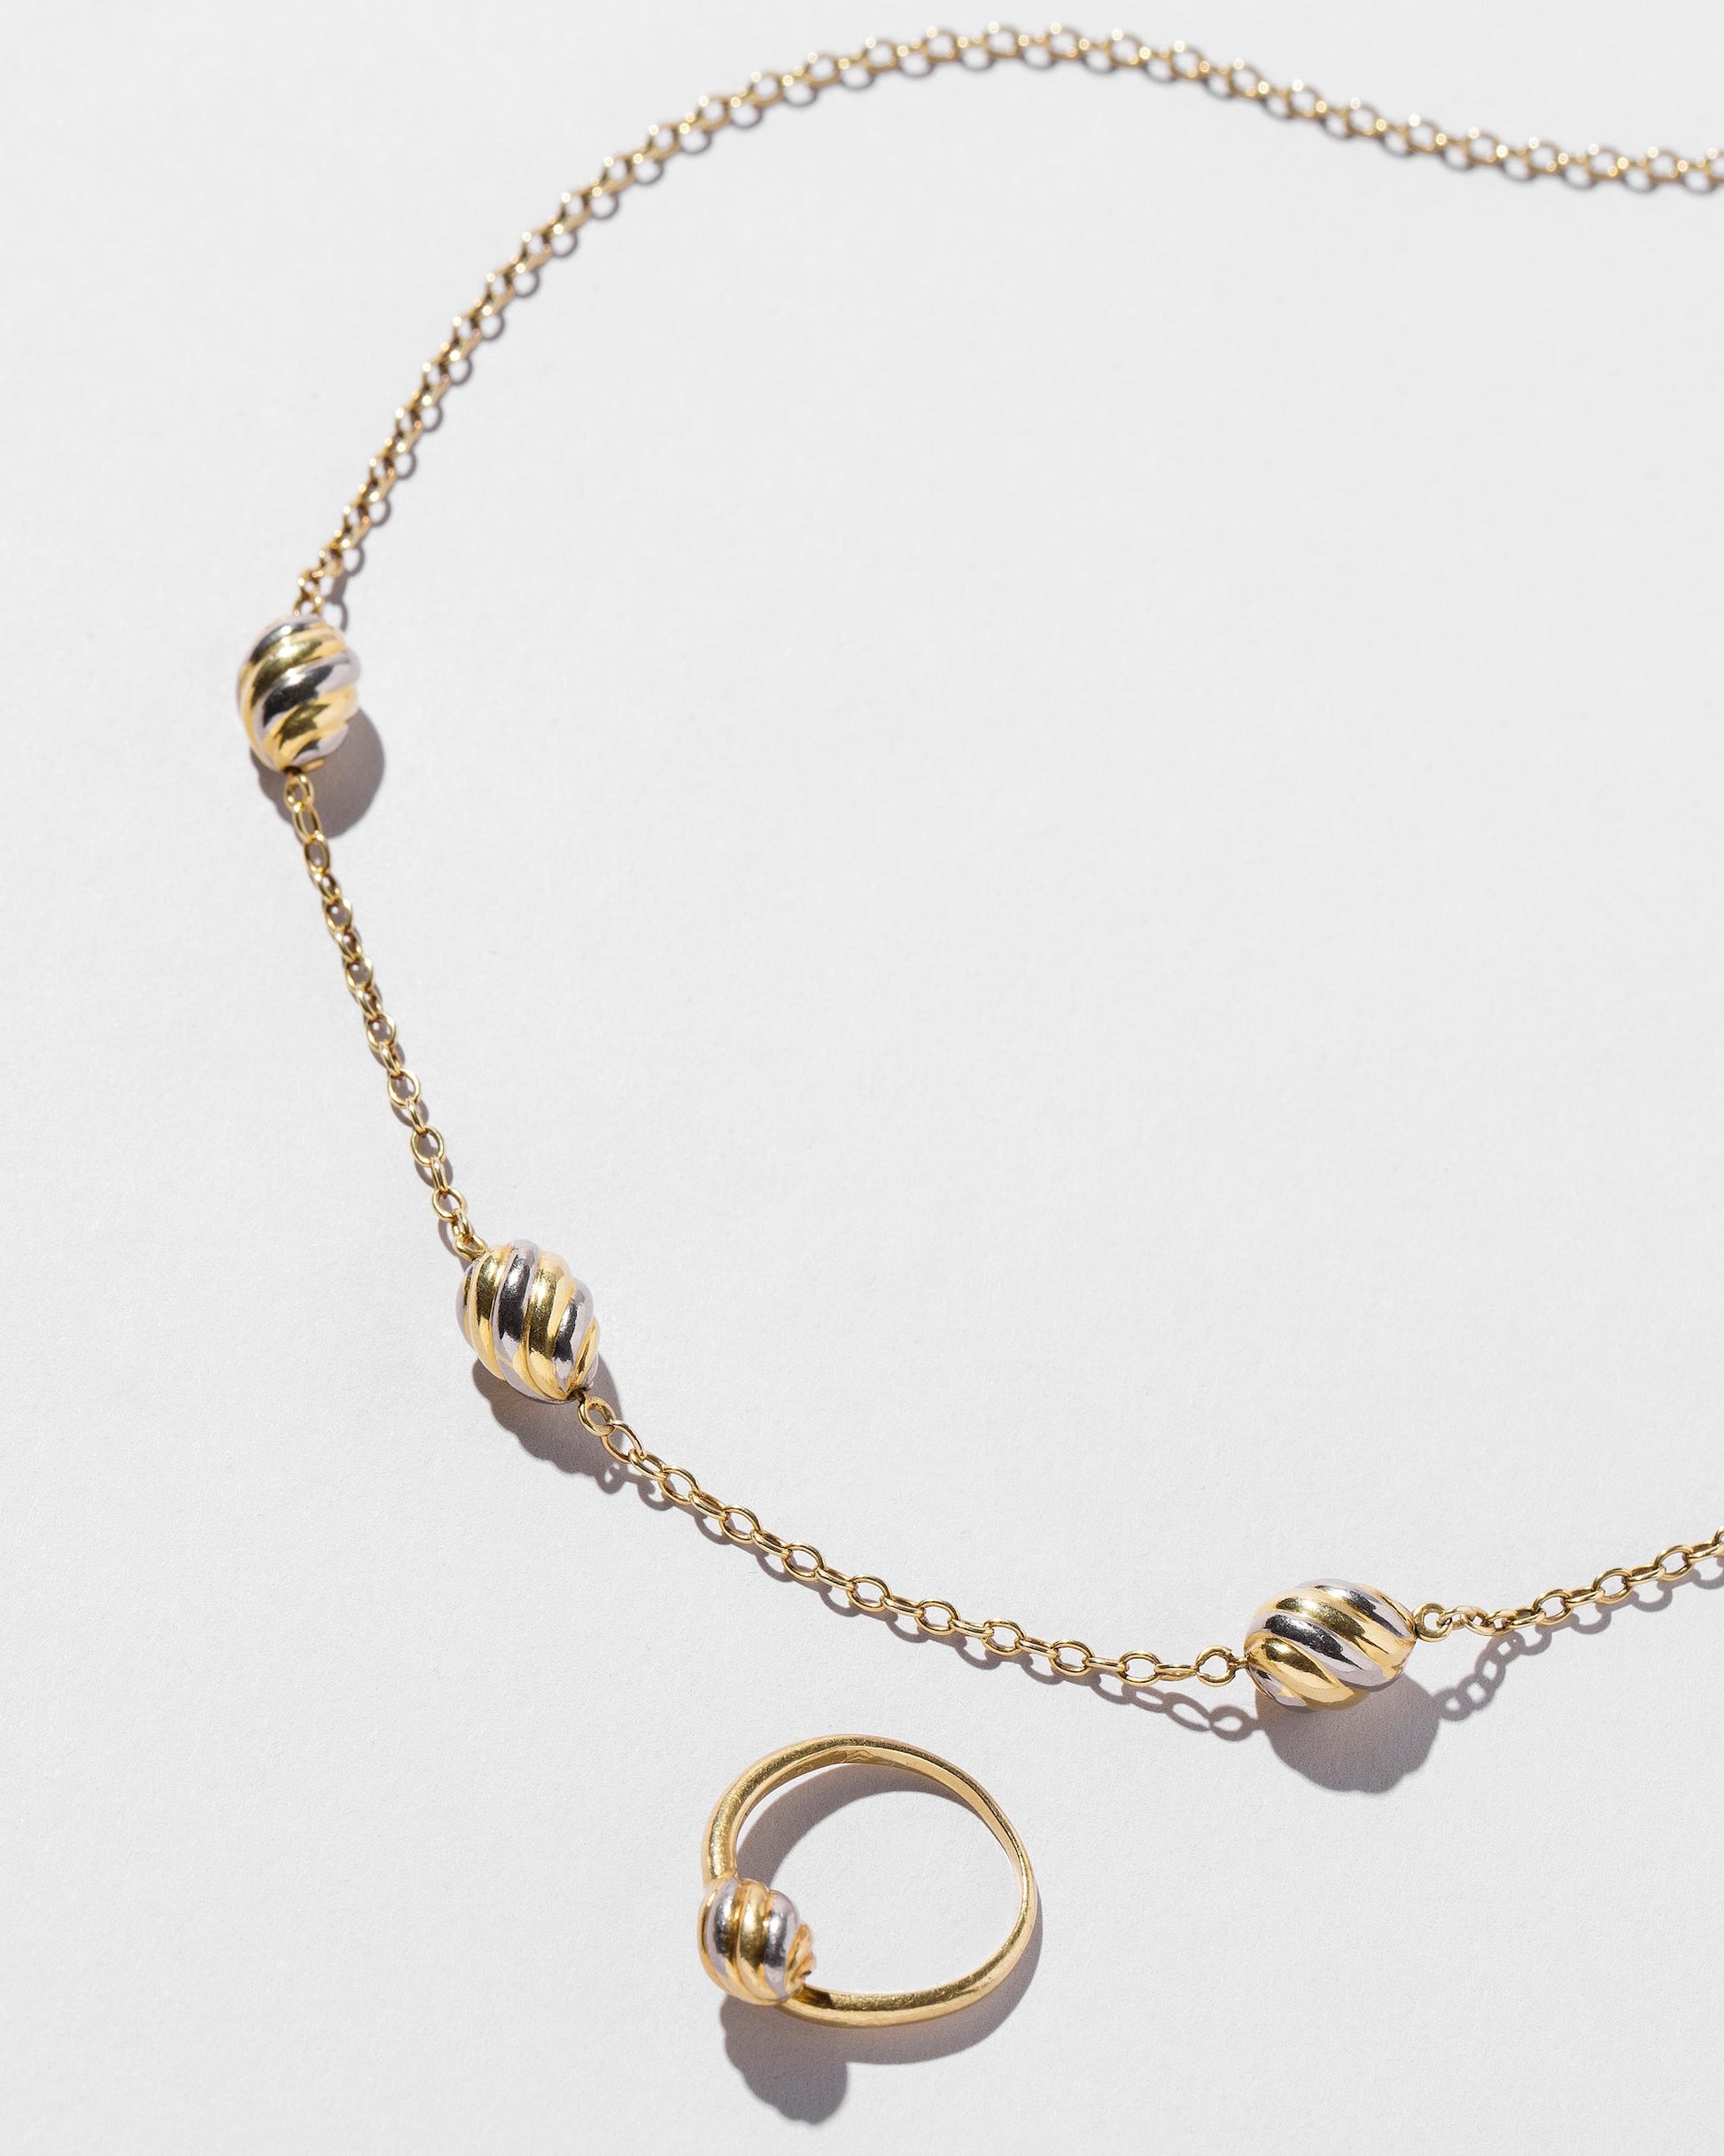  Cartier Necklace & Ring Set on light color background.